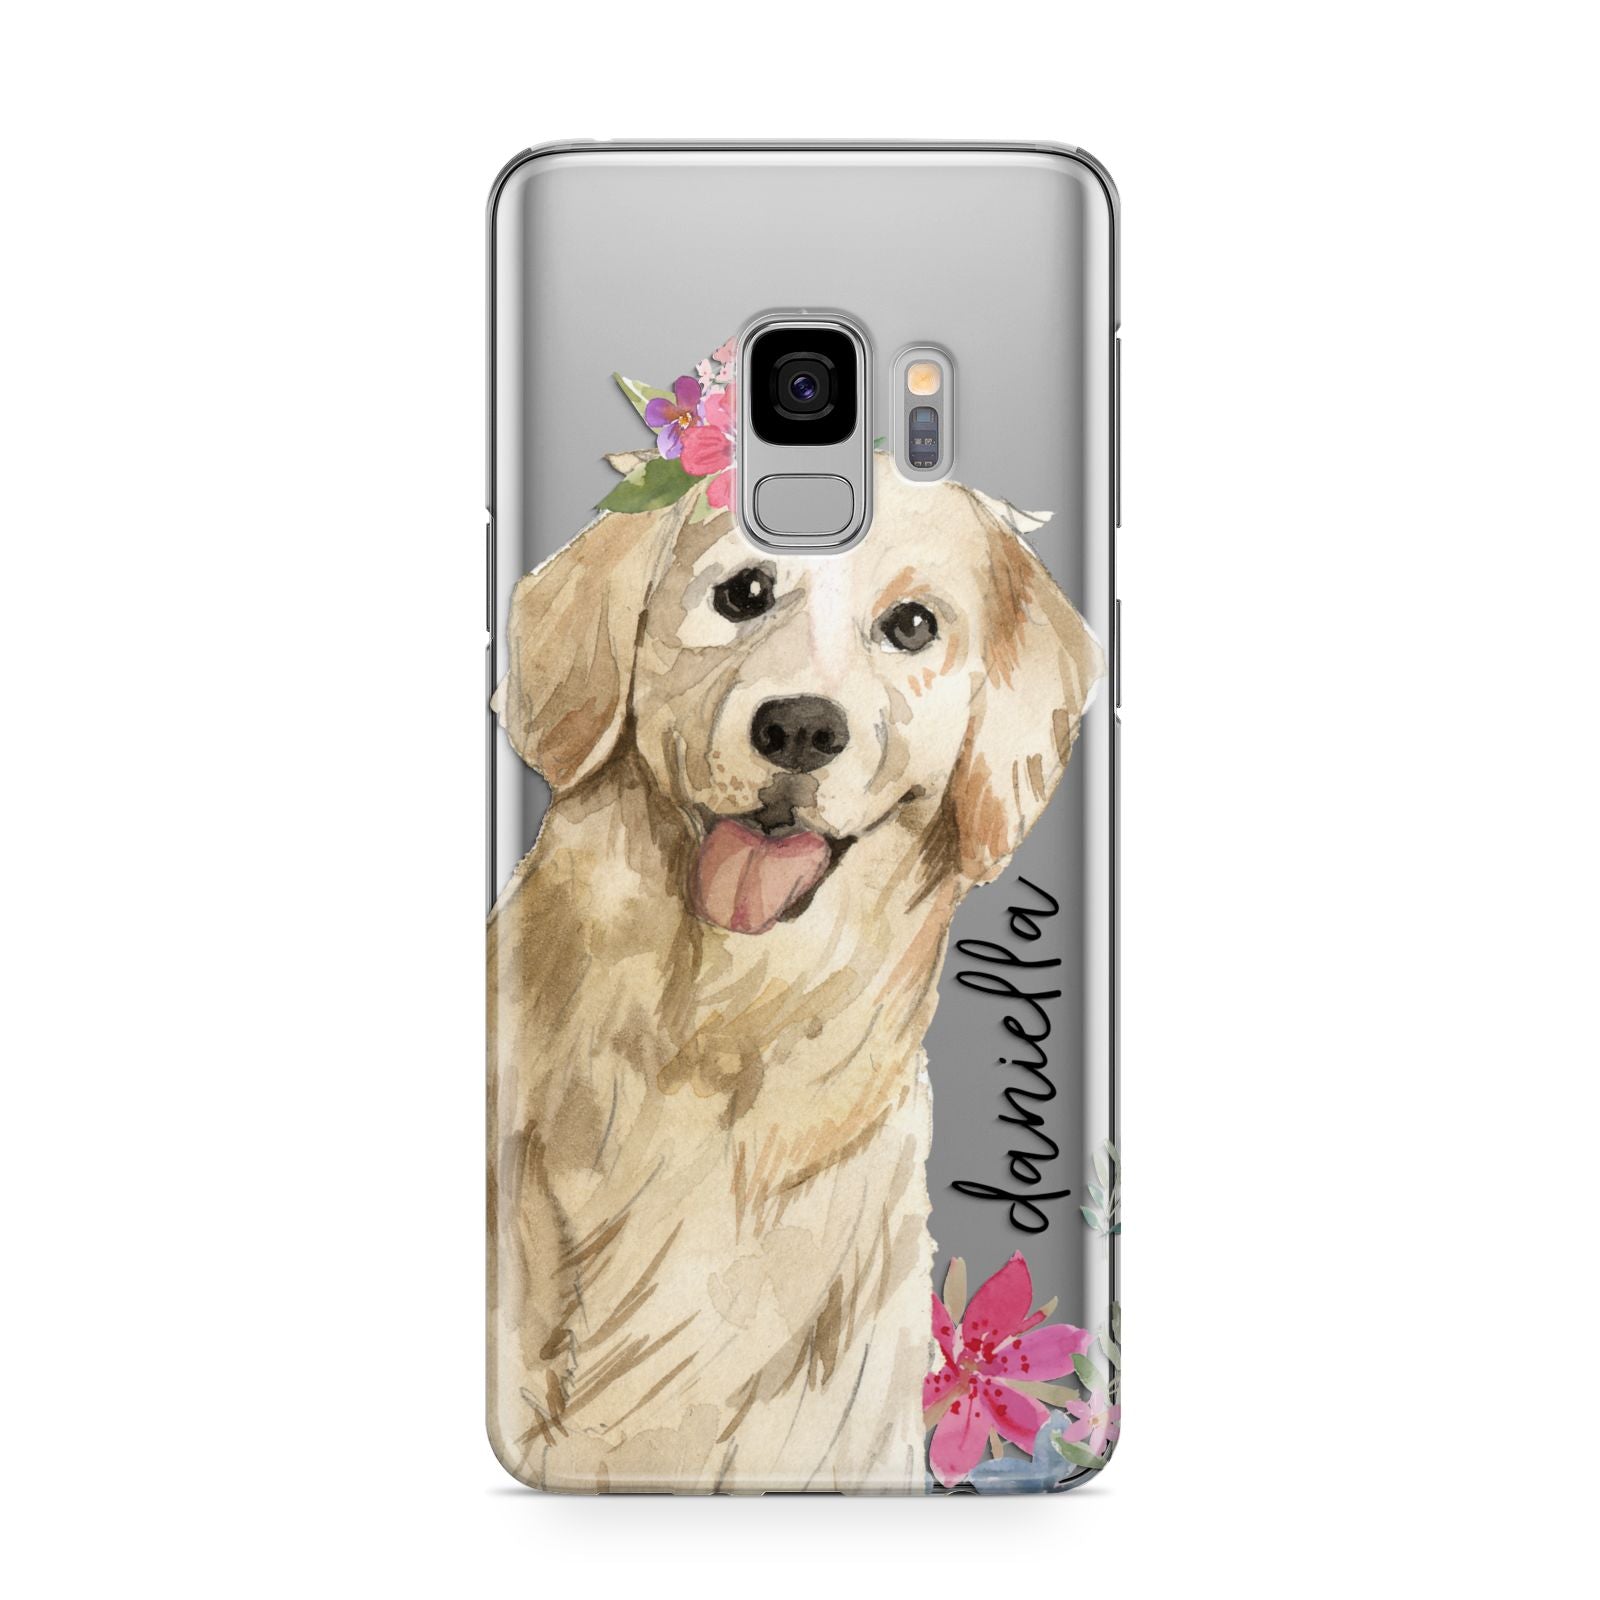 Personalised Golden Retriever Dog Samsung Galaxy S9 Case